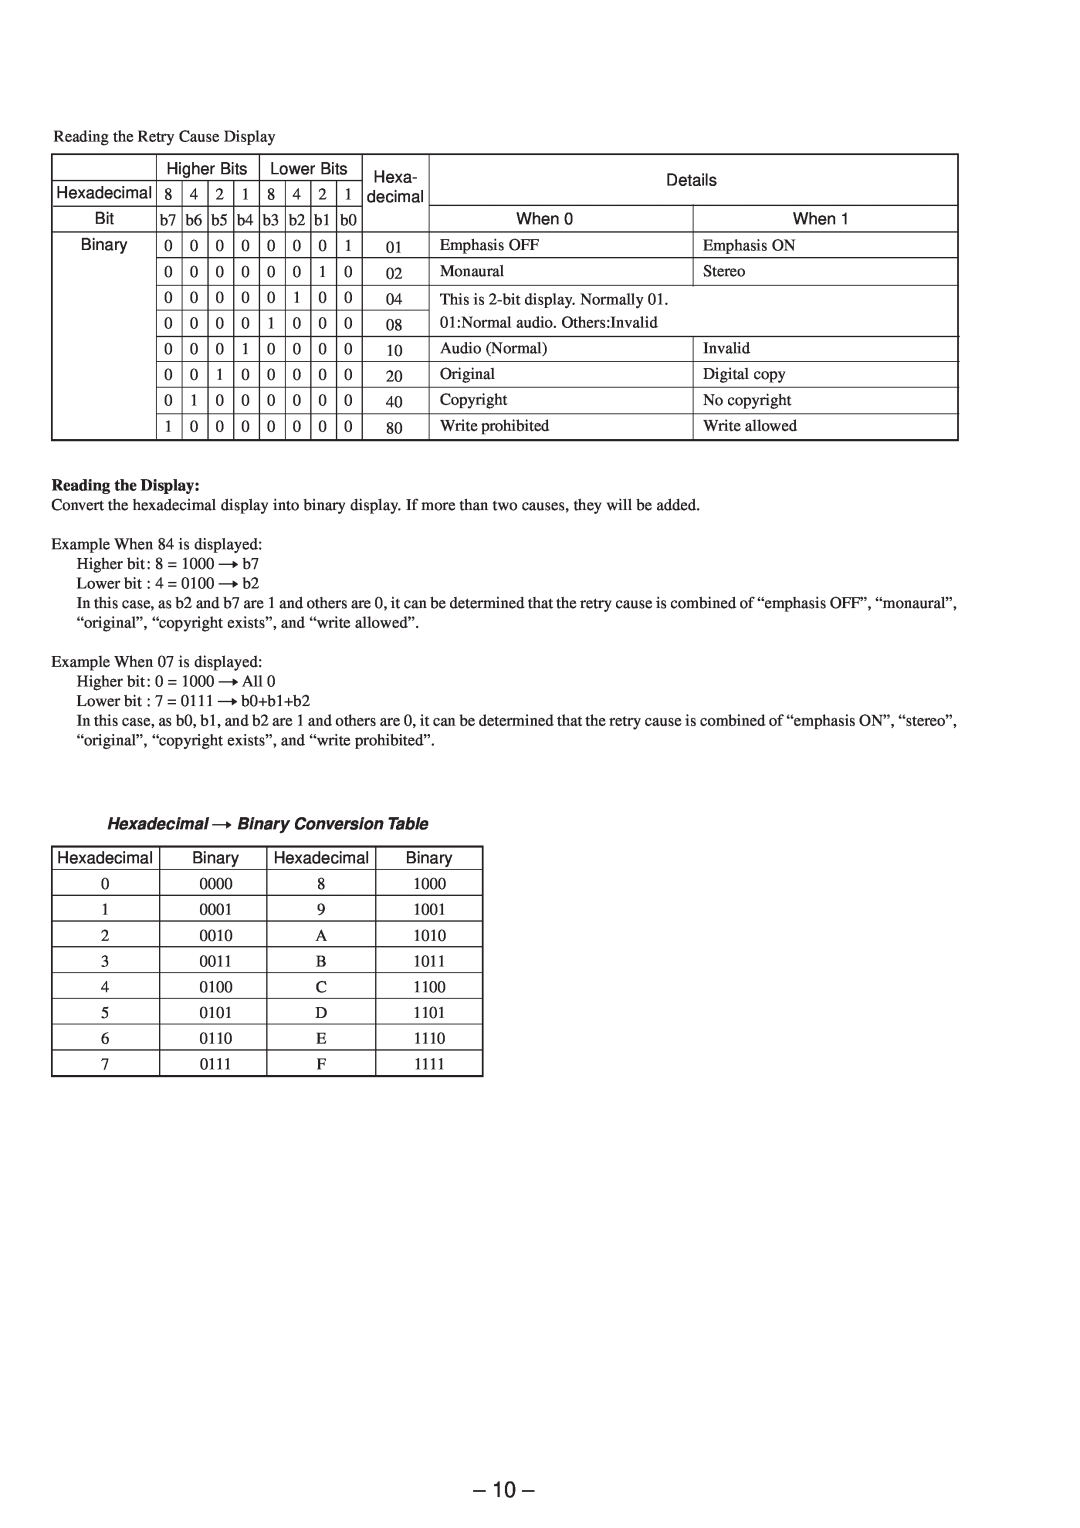 Sony MDS-JE530 service manual 10, Hexadecimal nBinary Conversion Table, Reading the Display 